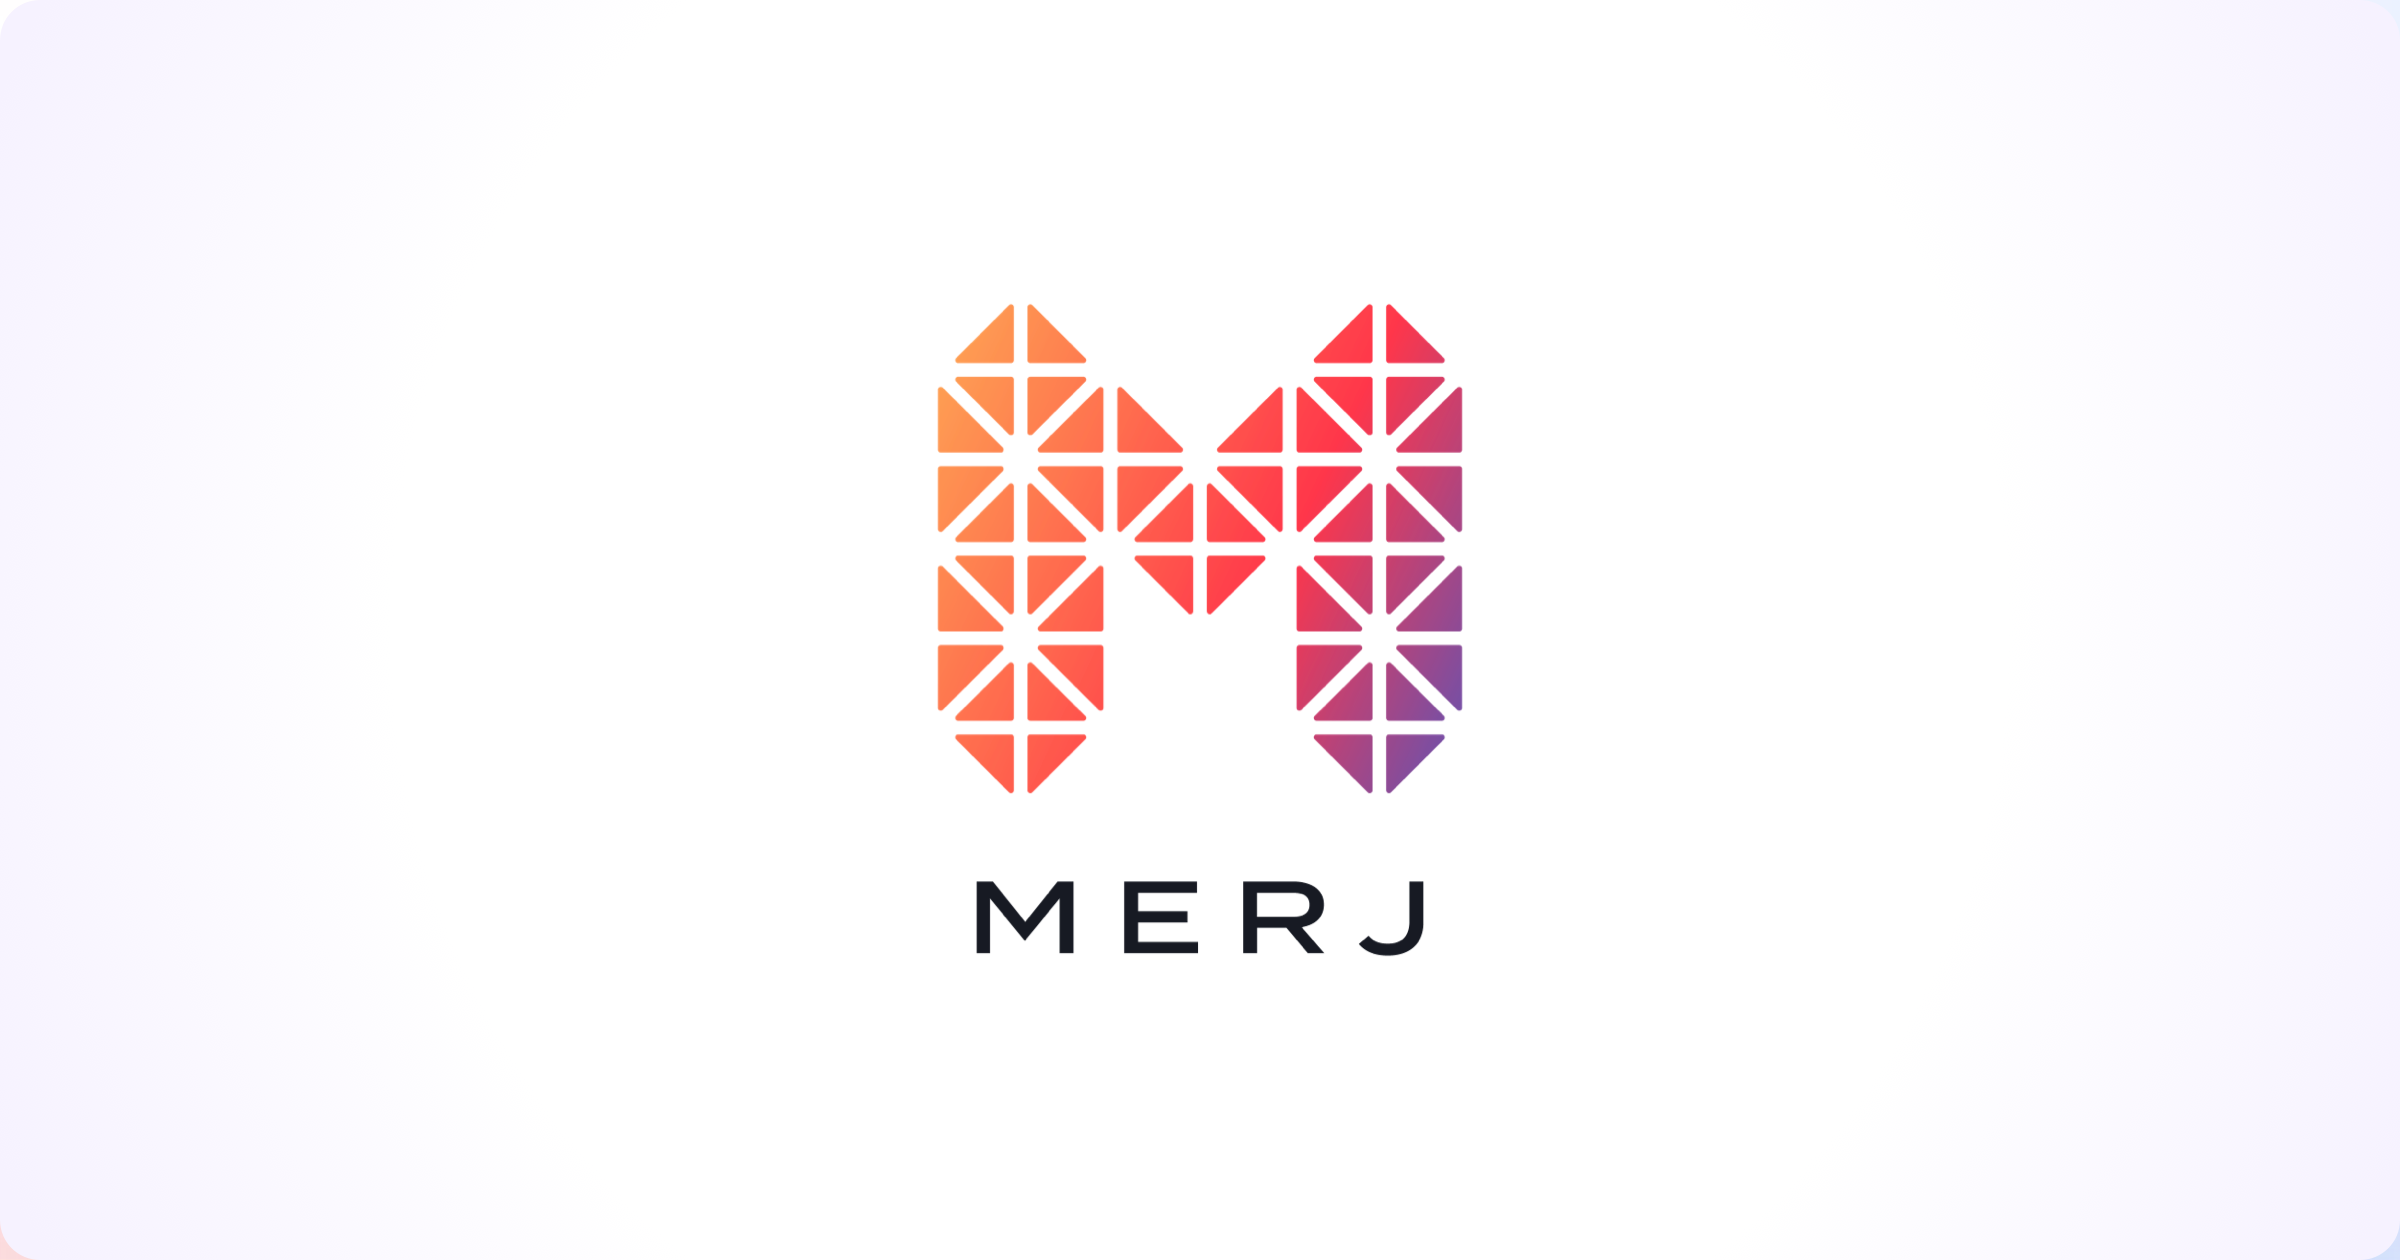 How MERJ Exchange reimagined a global securities market for the digital era